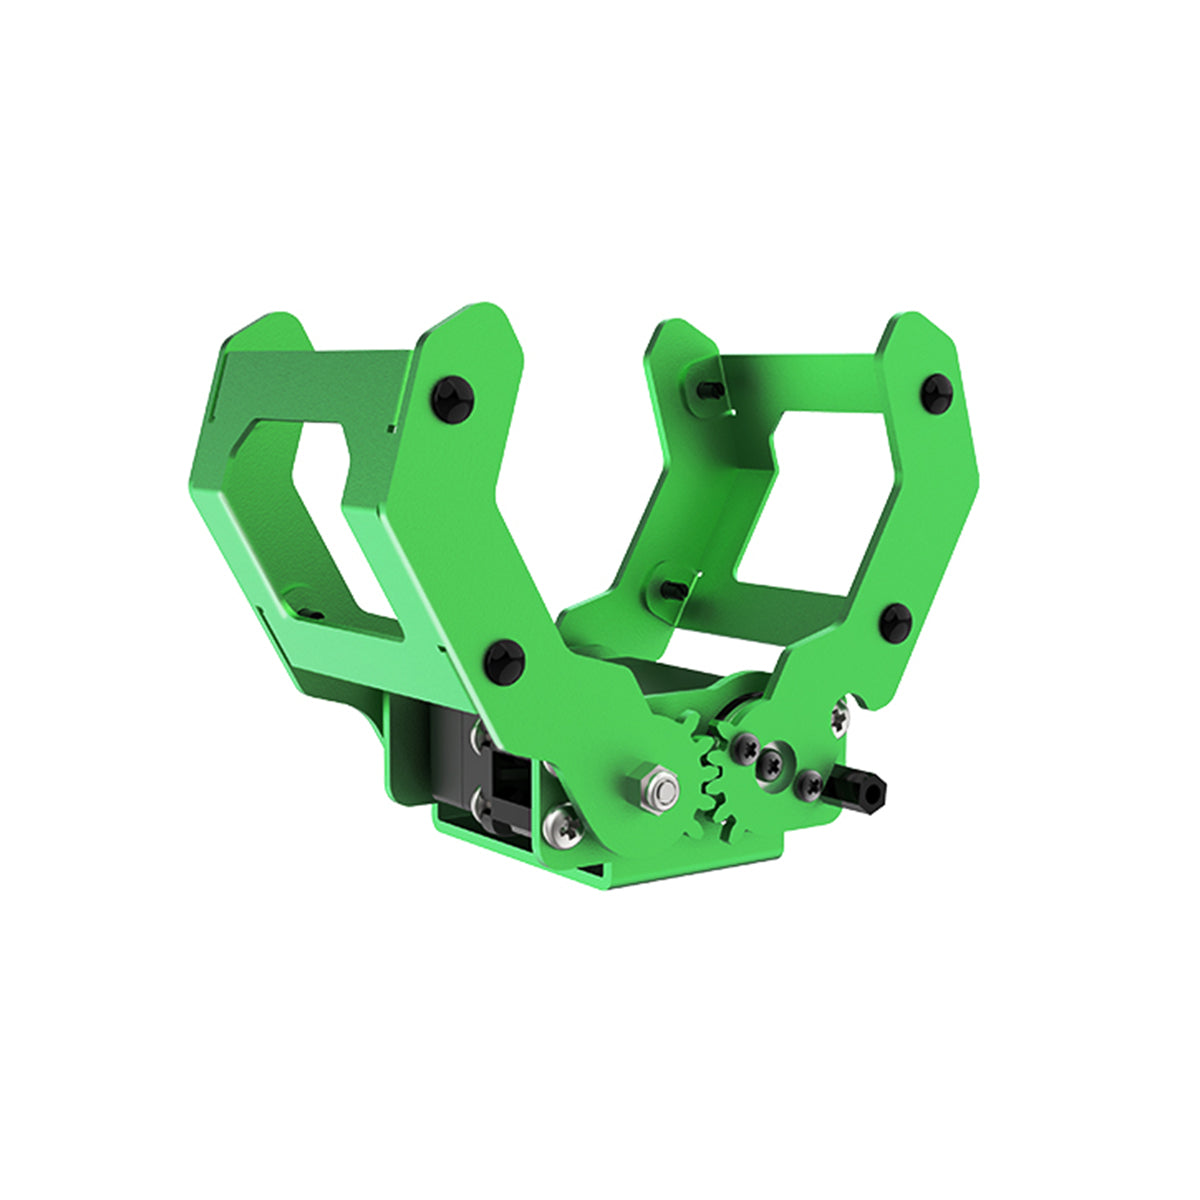 Hiwonder Green Robot Gripper Aluminium Alloy Flexible Opening and Closing for Robotic Arm